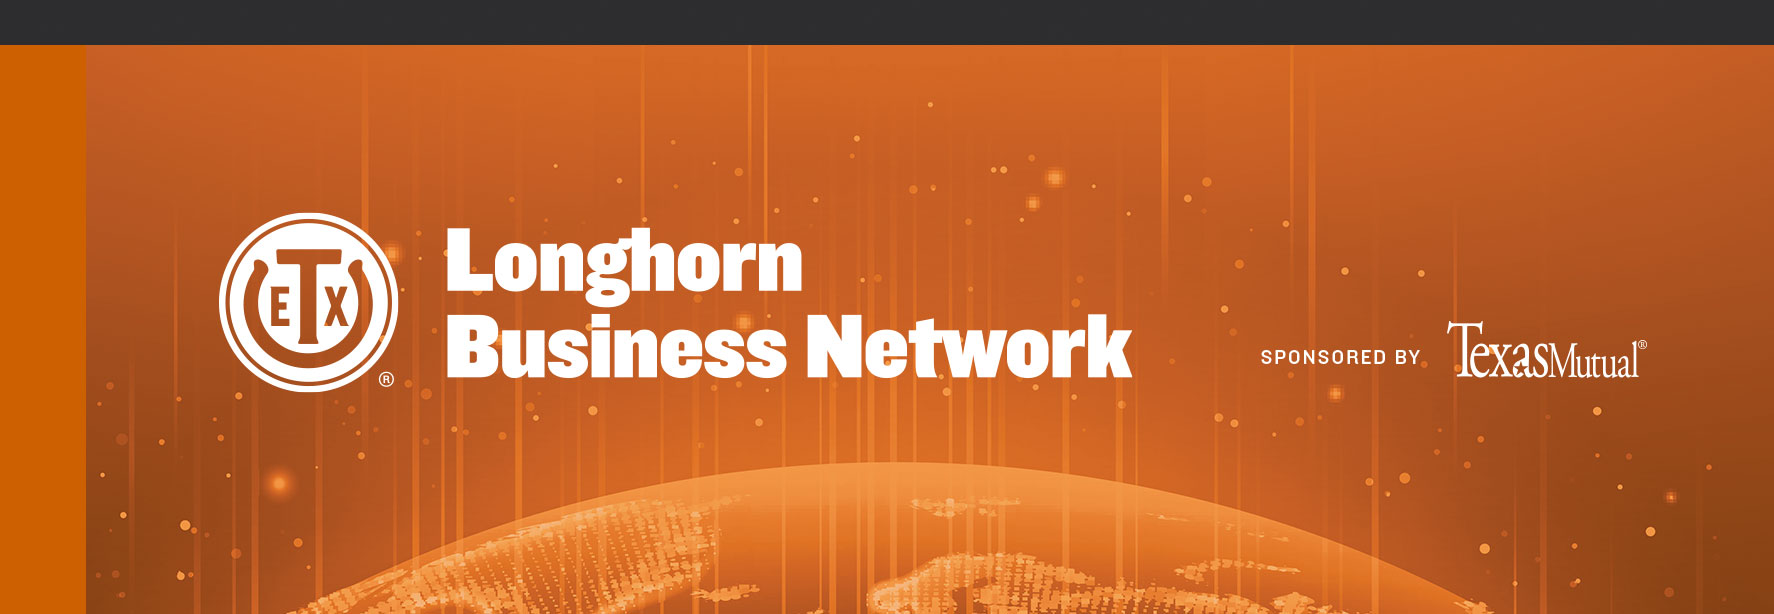 Longhorn Business Network